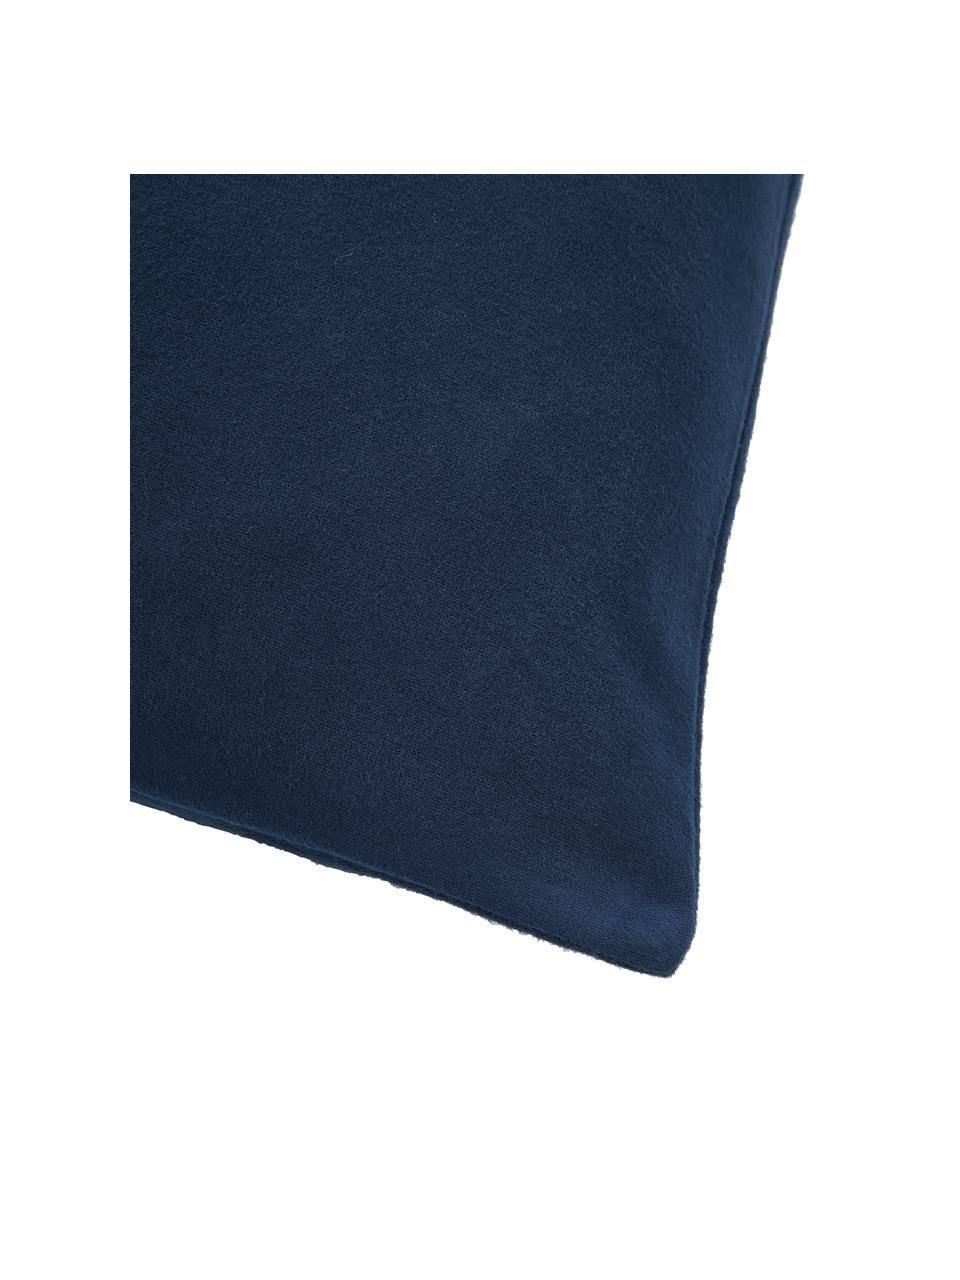 Federa in flanella di cotone blu navy Biba, Blu navy, Larg. 50 x Lung. 80 cm